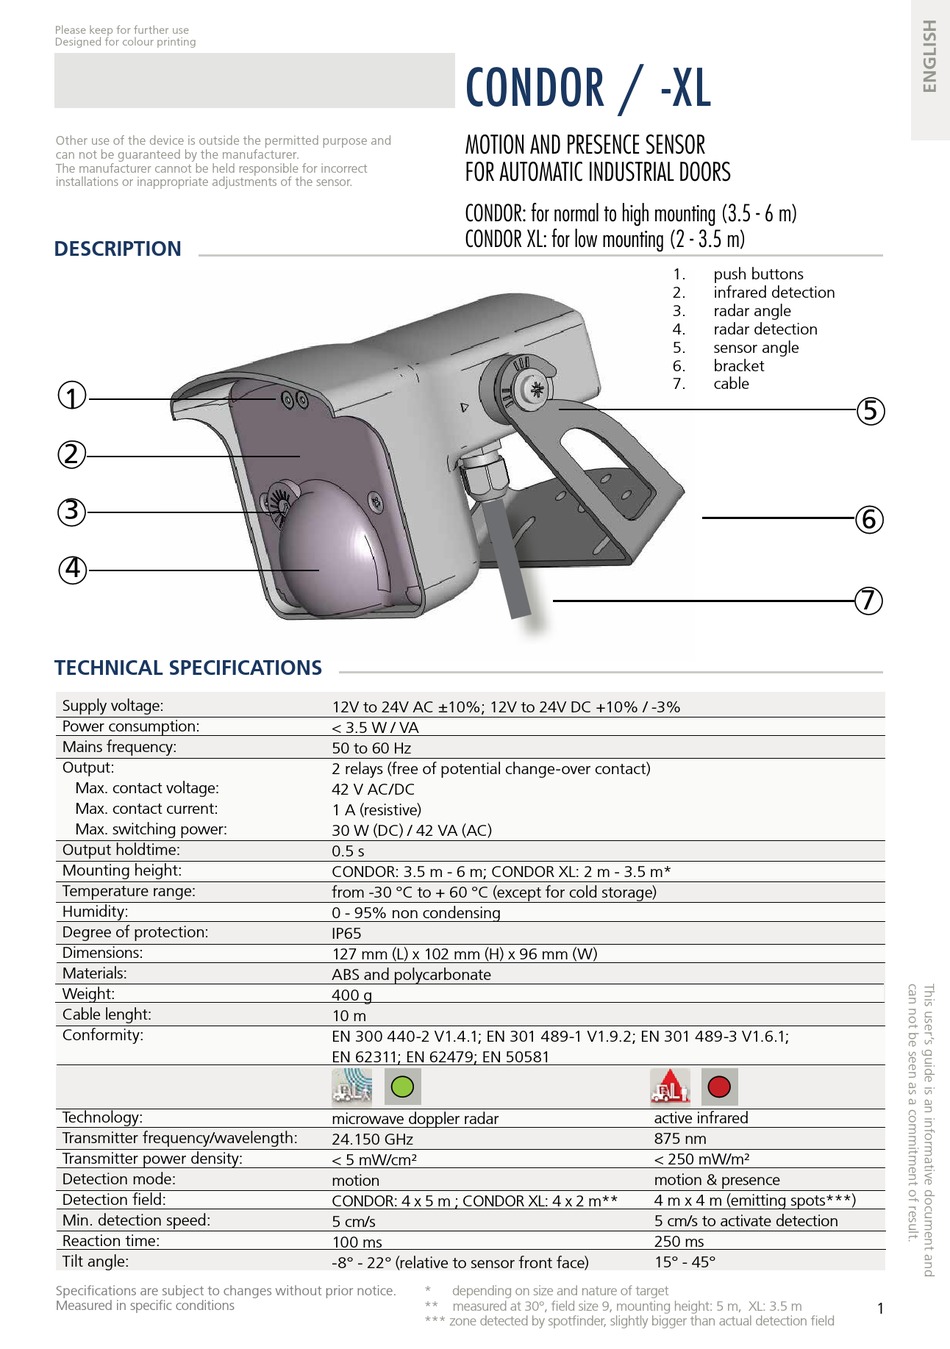 acme condor buggy kit manual pdf